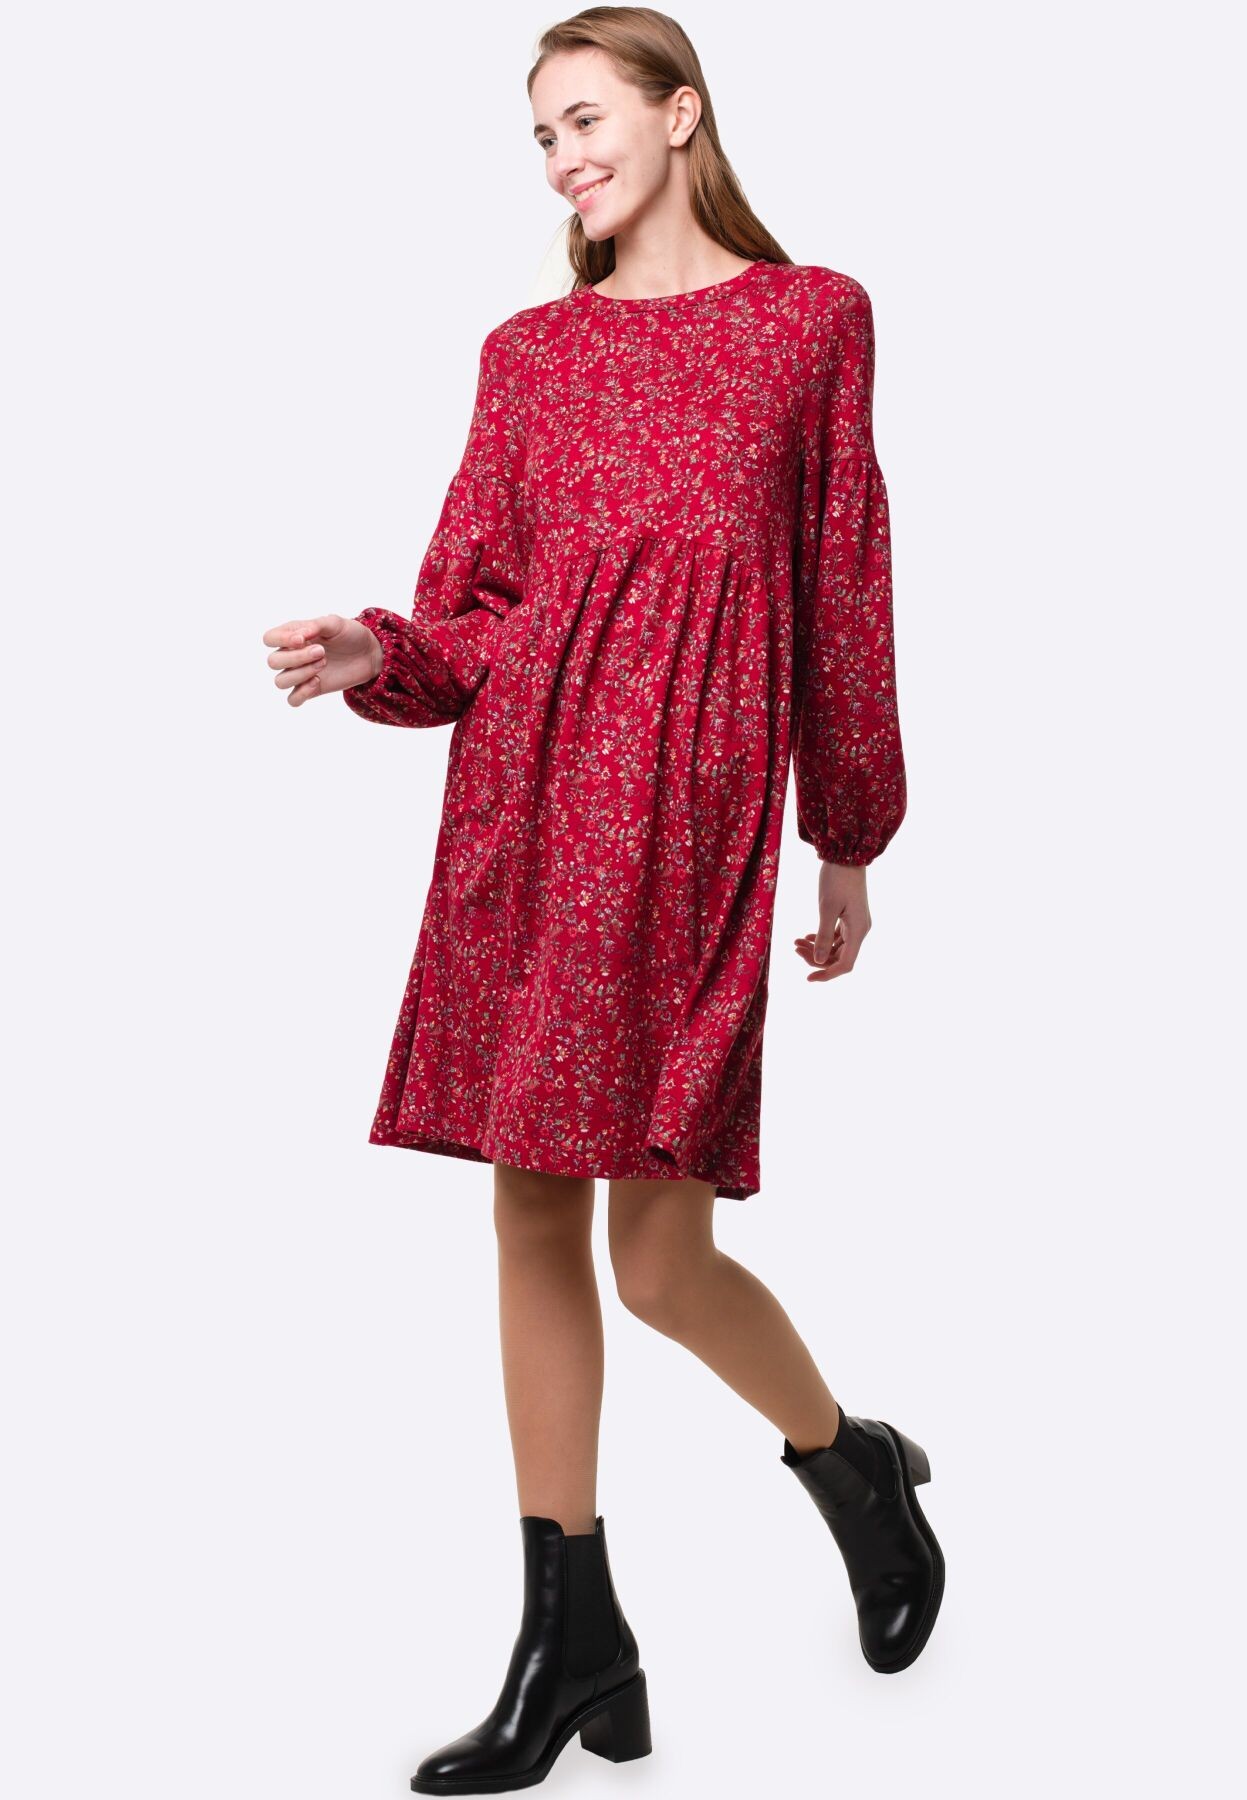 Knitted dress of free cut with voluminous raglan sleeves 5667k